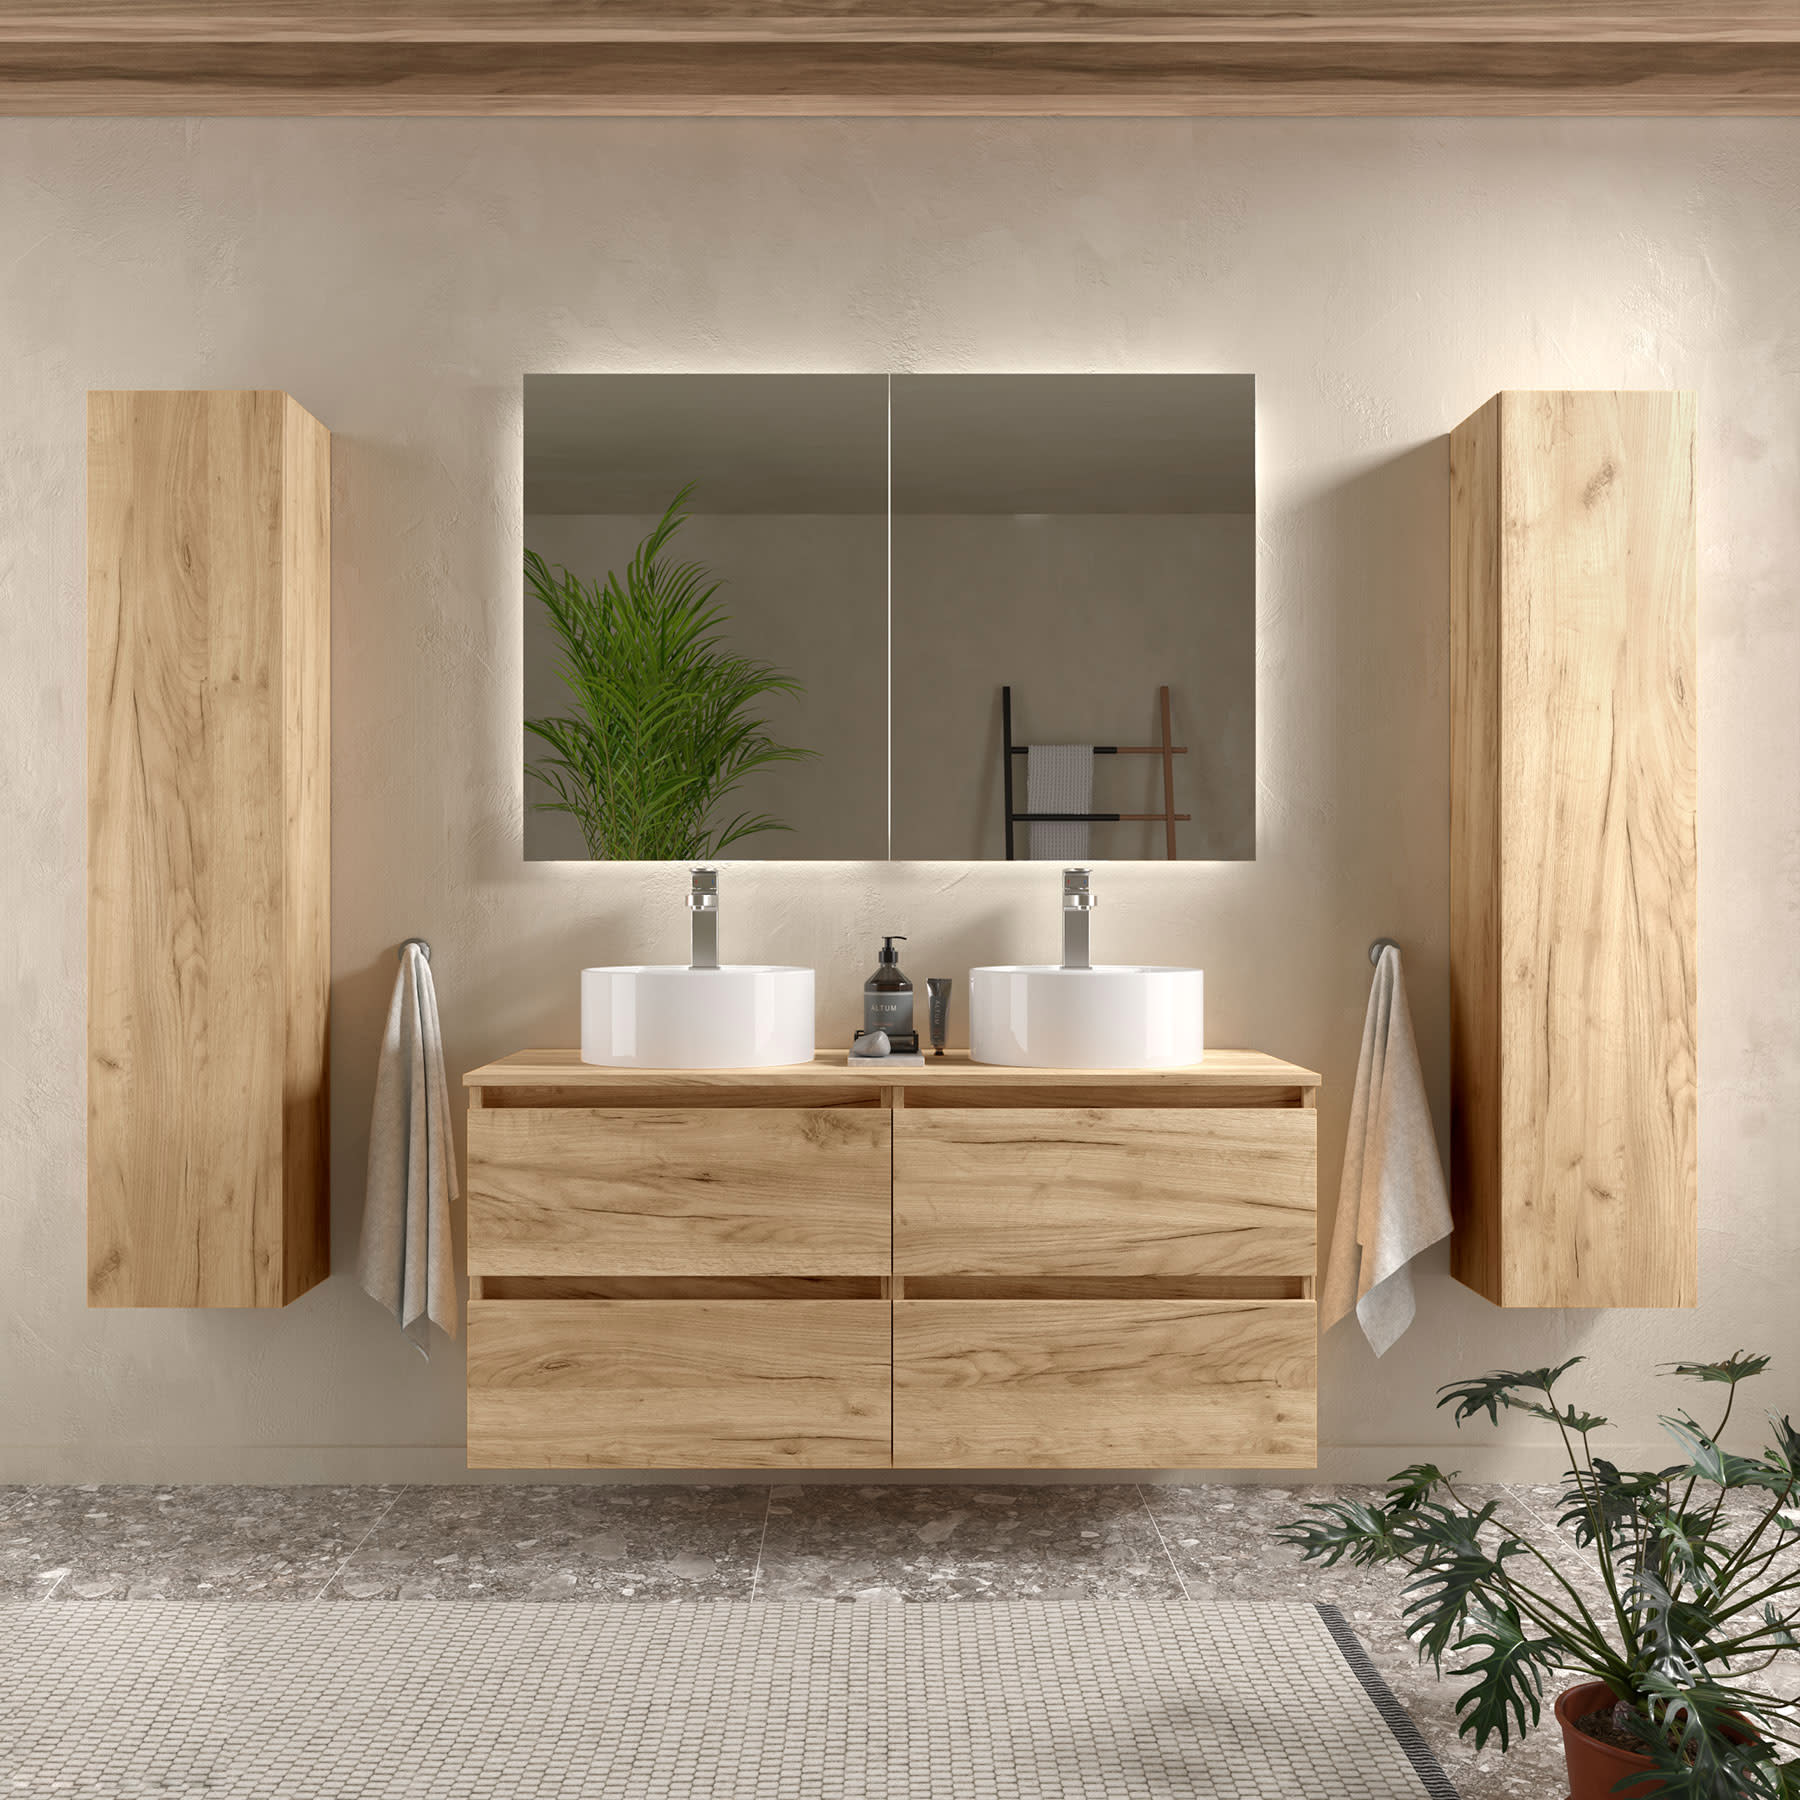 Mueble de baño - Modena 120 cm